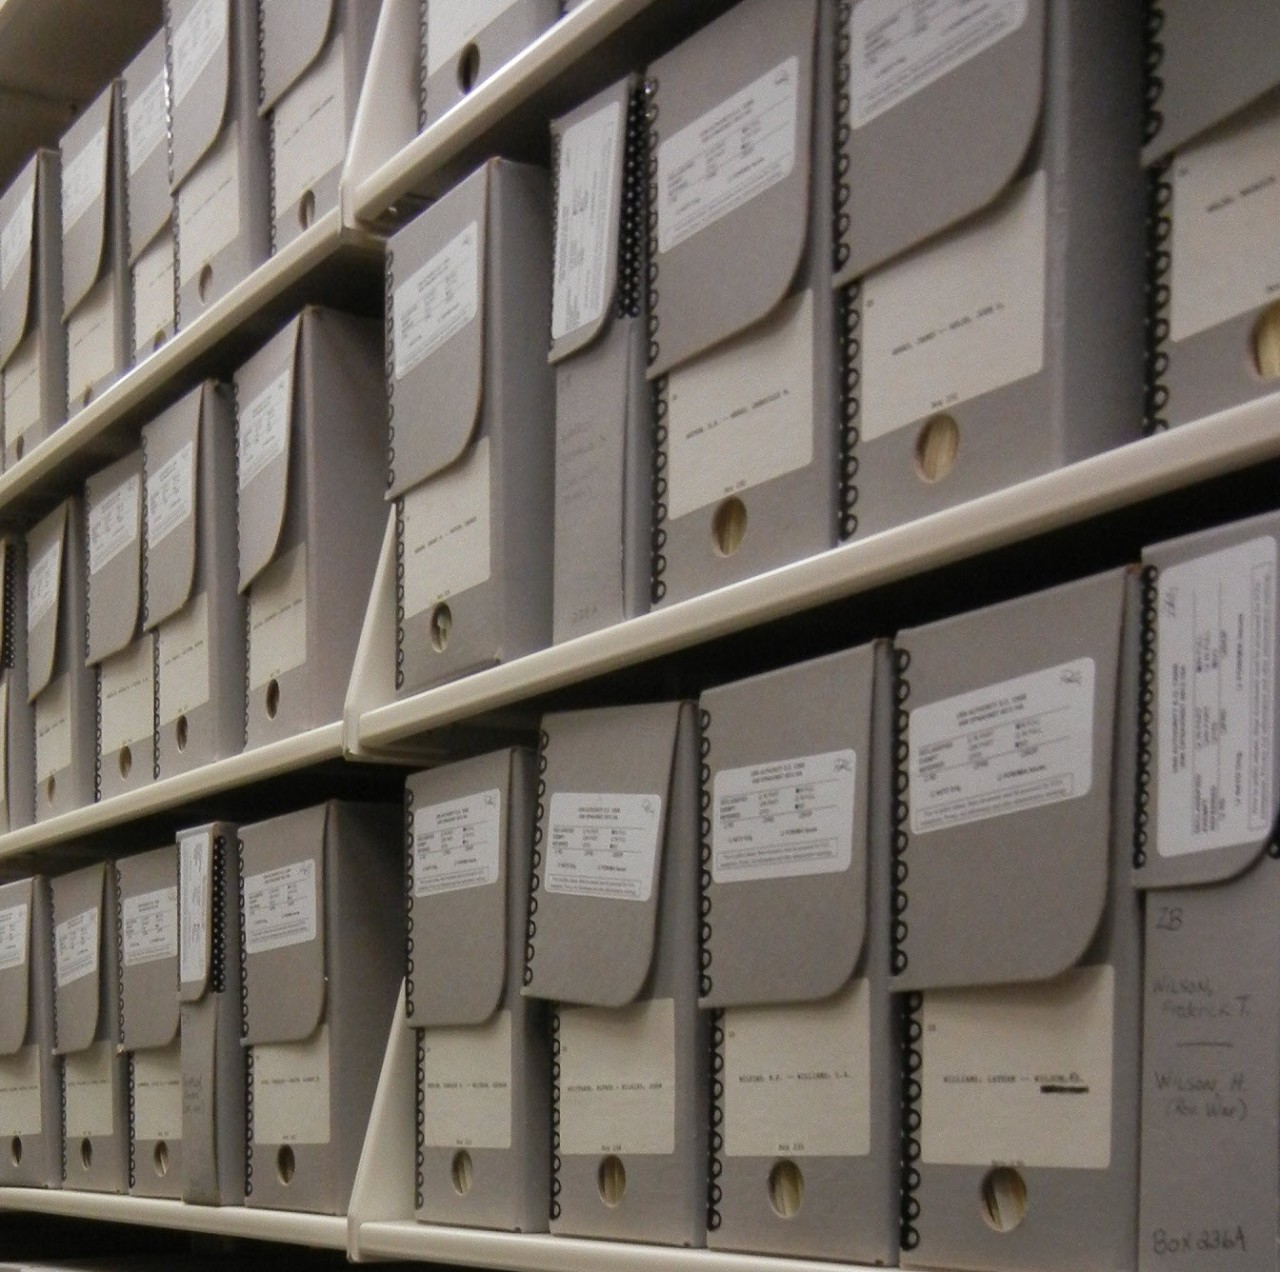 Historic Documents MVLS  NorthNet Library System